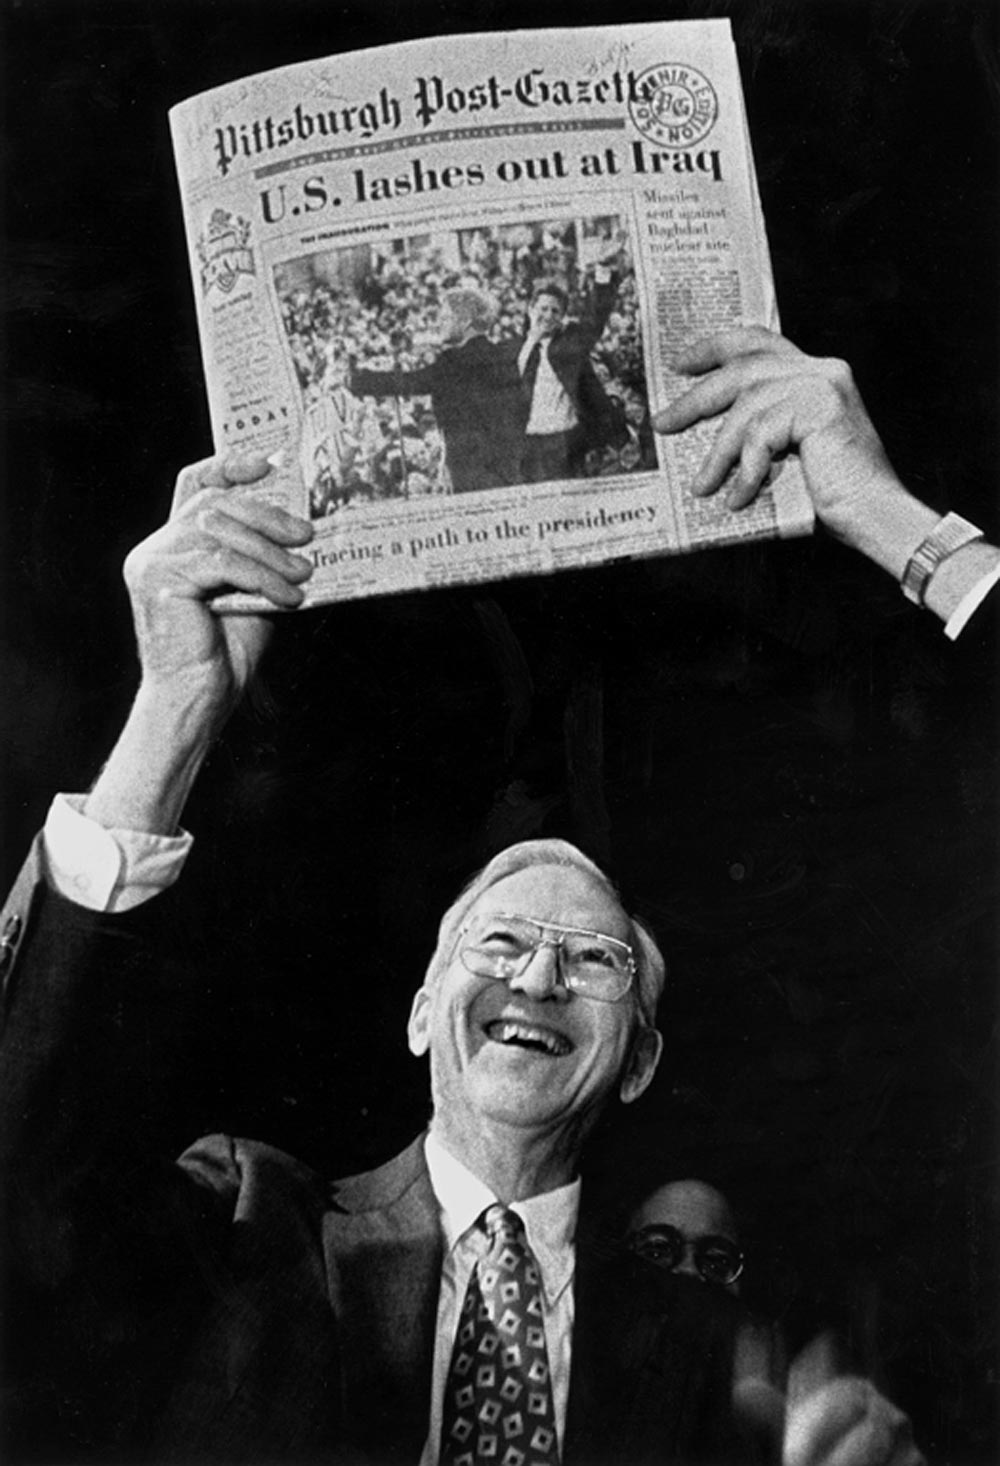 WAR IS OVER Pittsburgh Post Gazette 15 August 1945 - ™